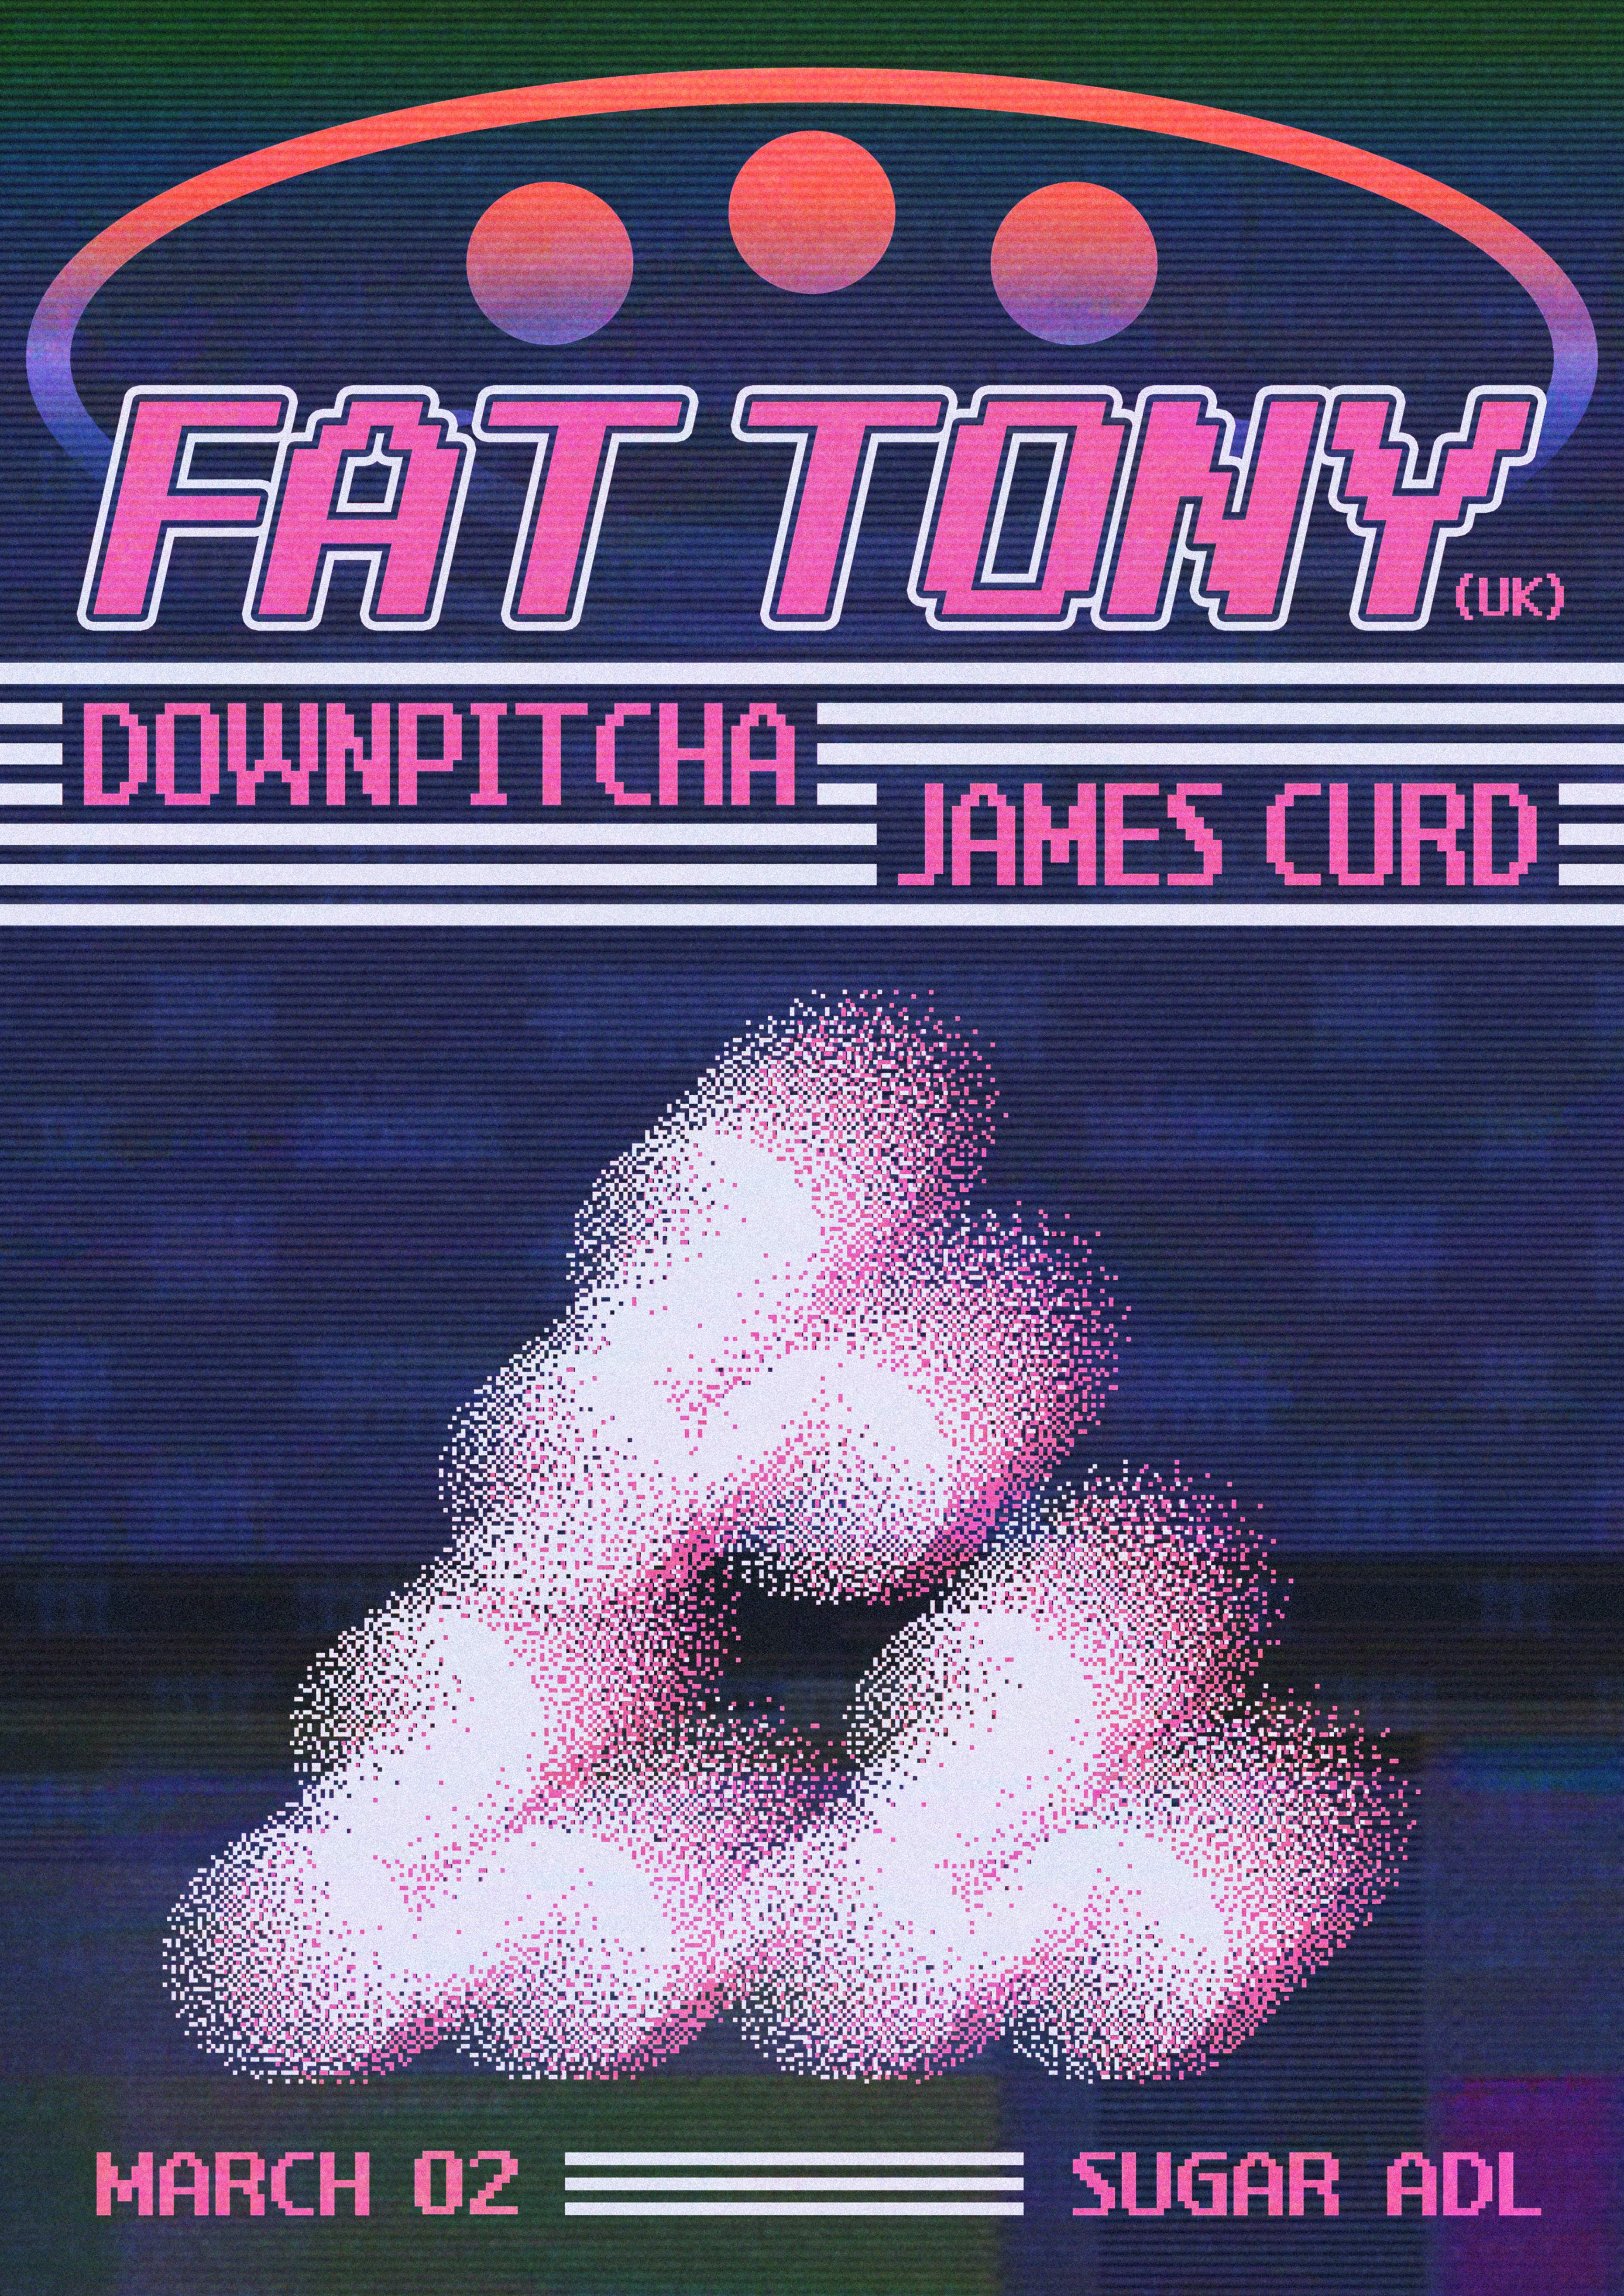 Sugar: Fat Tony (UK) - Página frontal